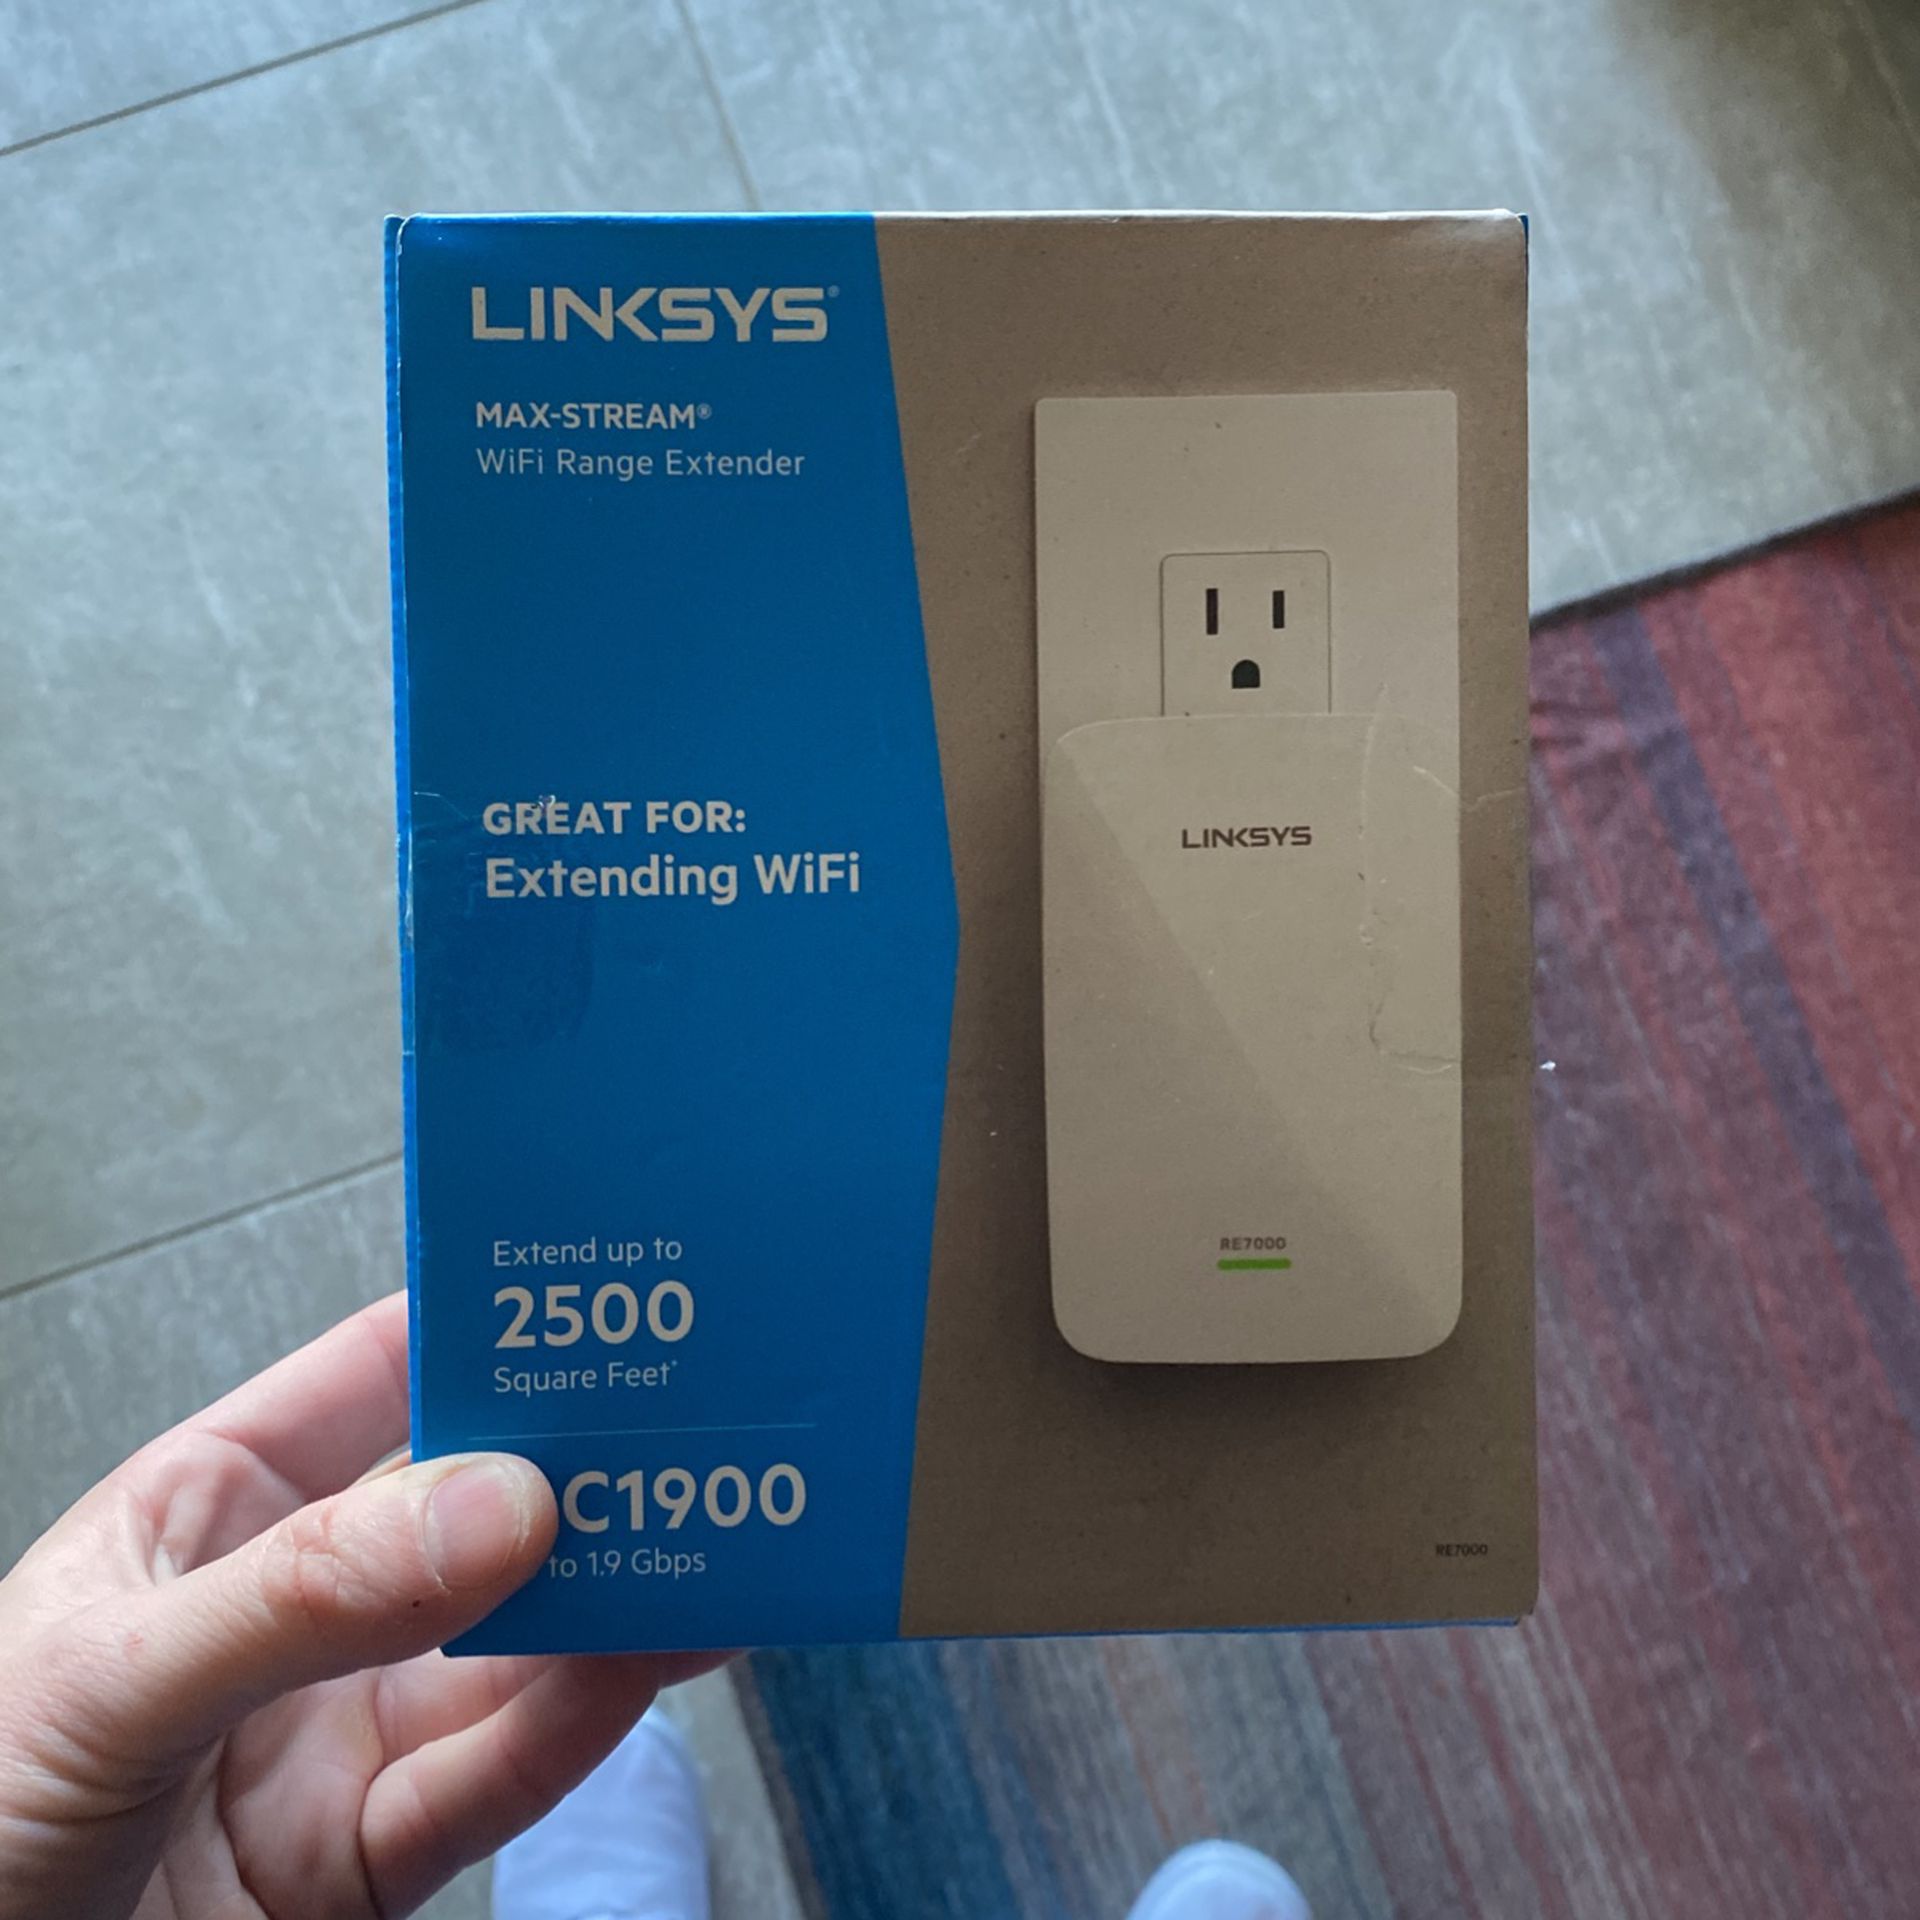 Linksys MaxStream Wifi Range Extender